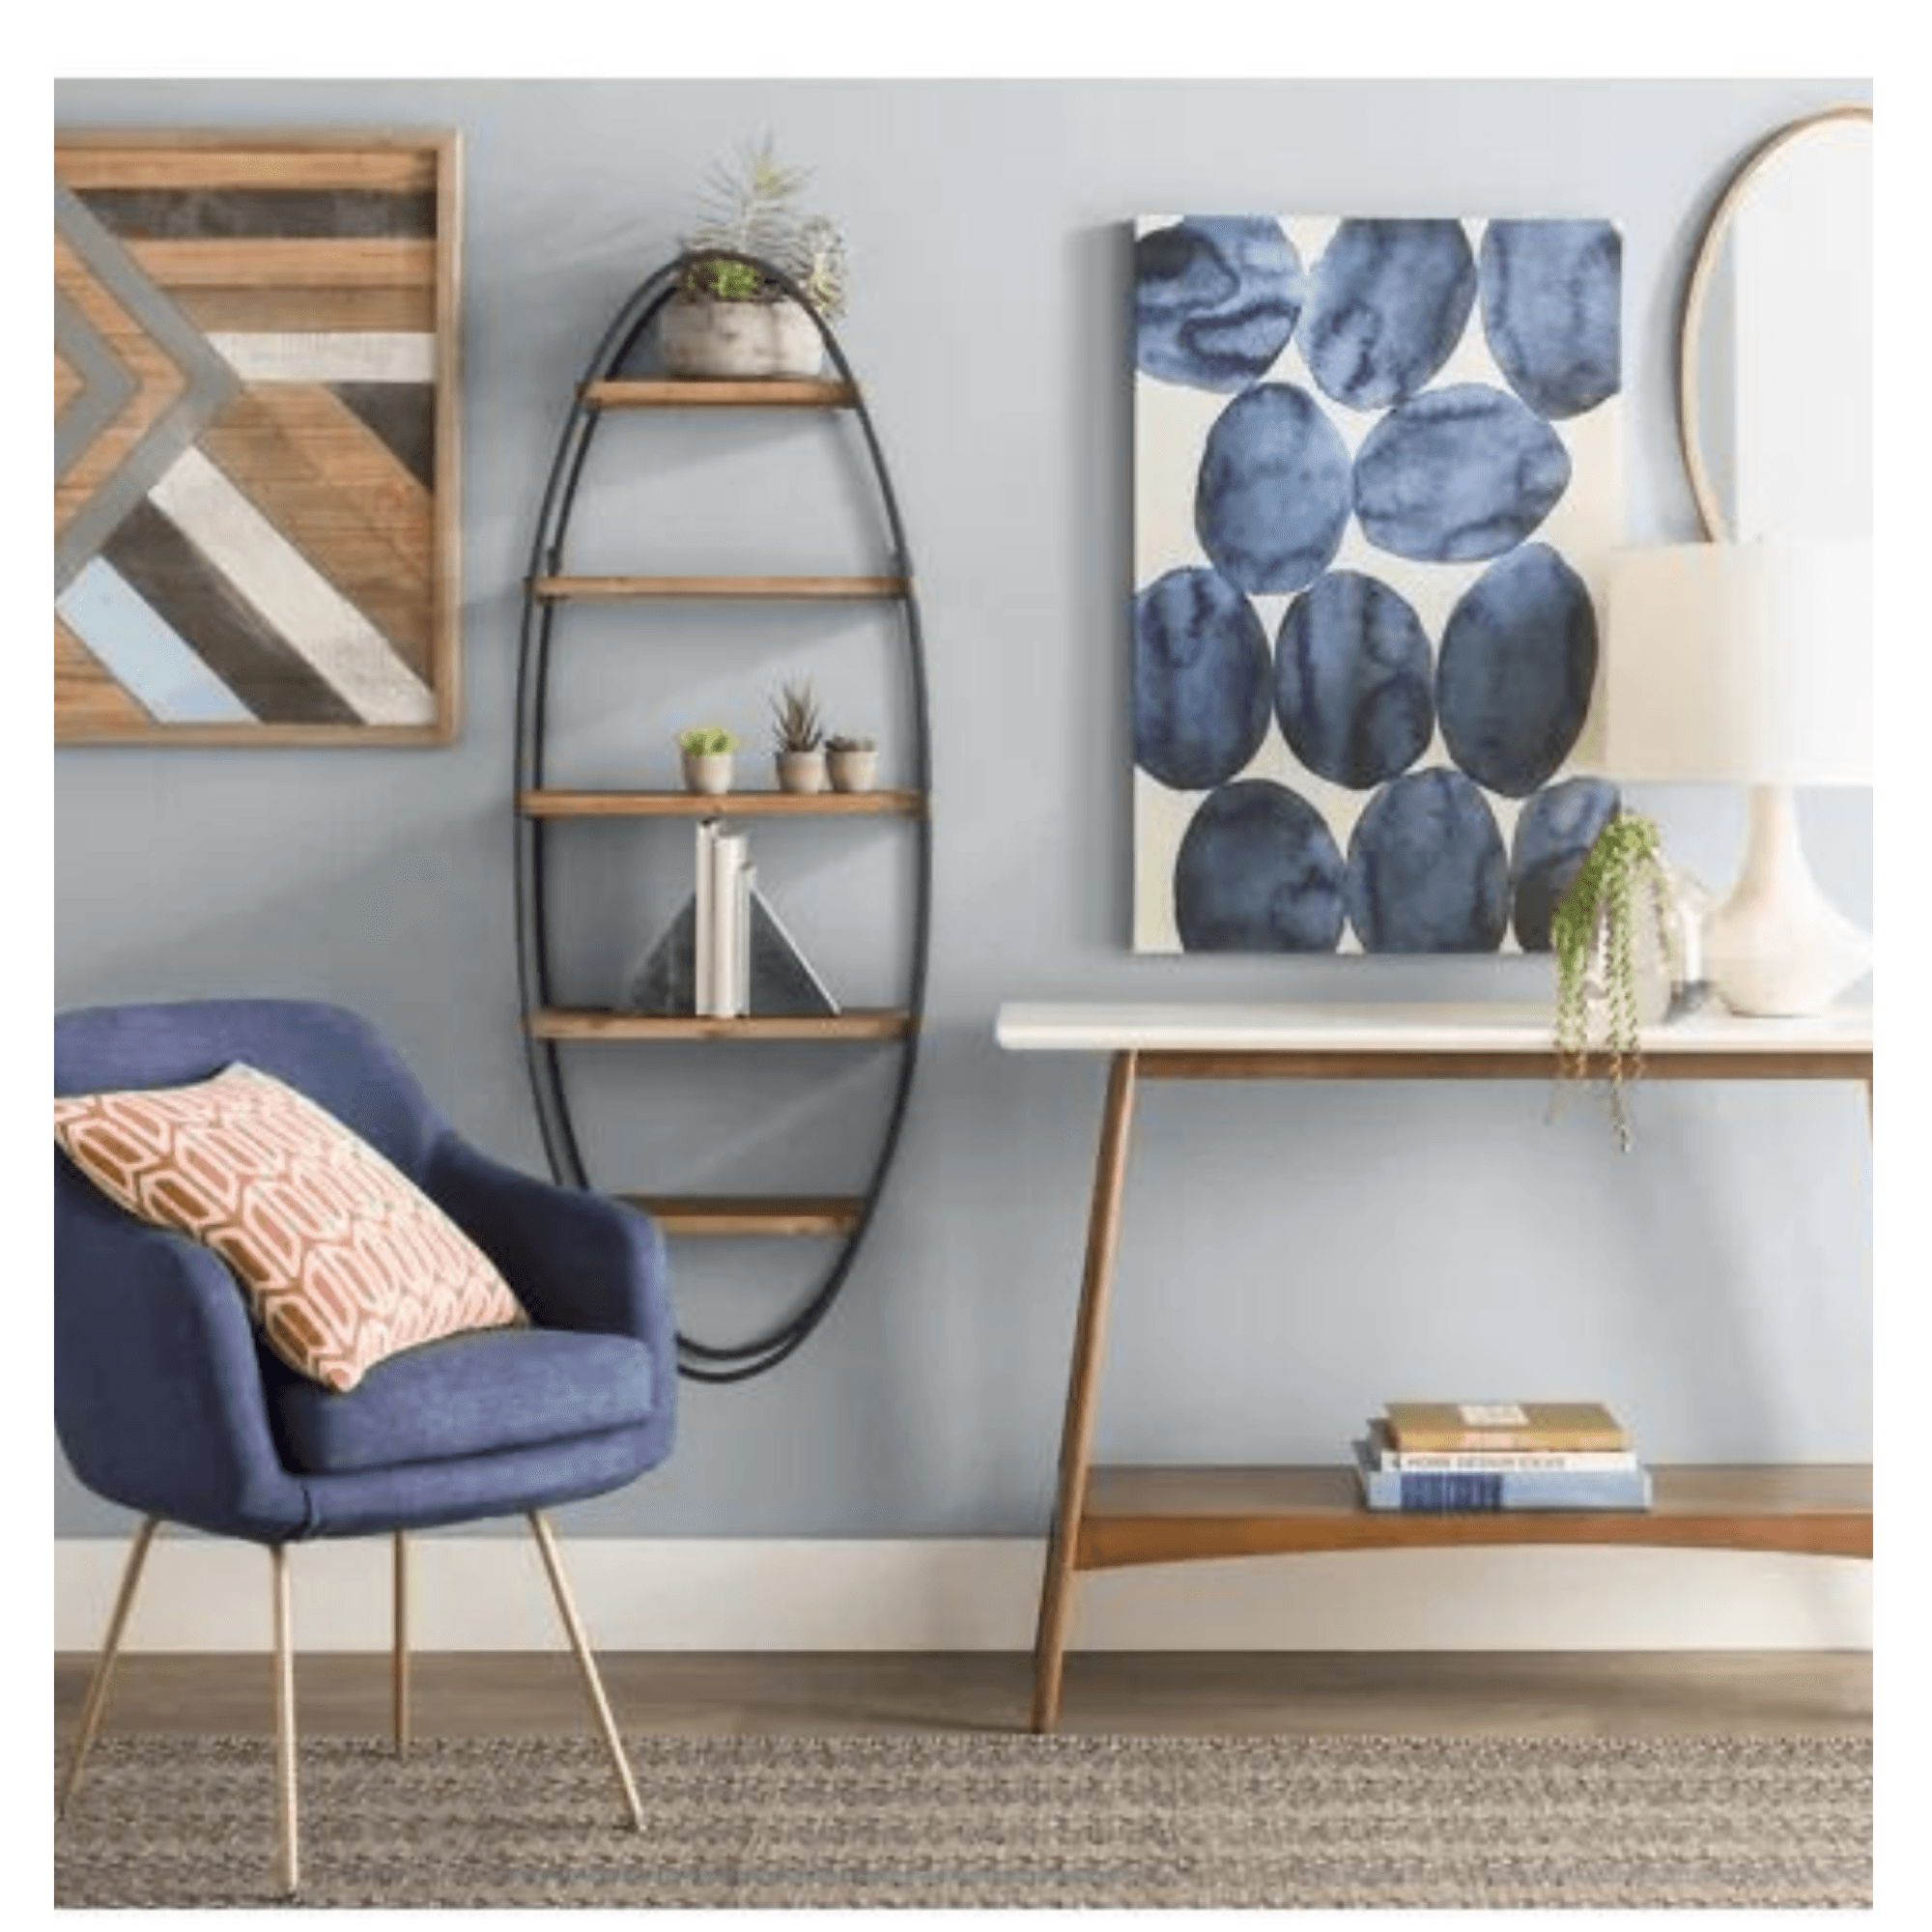 5 Piece Oval Accent Shelf, Accent Shelf Hanging Book Shelves for Living Room, Bedroom, Office, Burned Finish Display Shelves (Black) - ValueBox